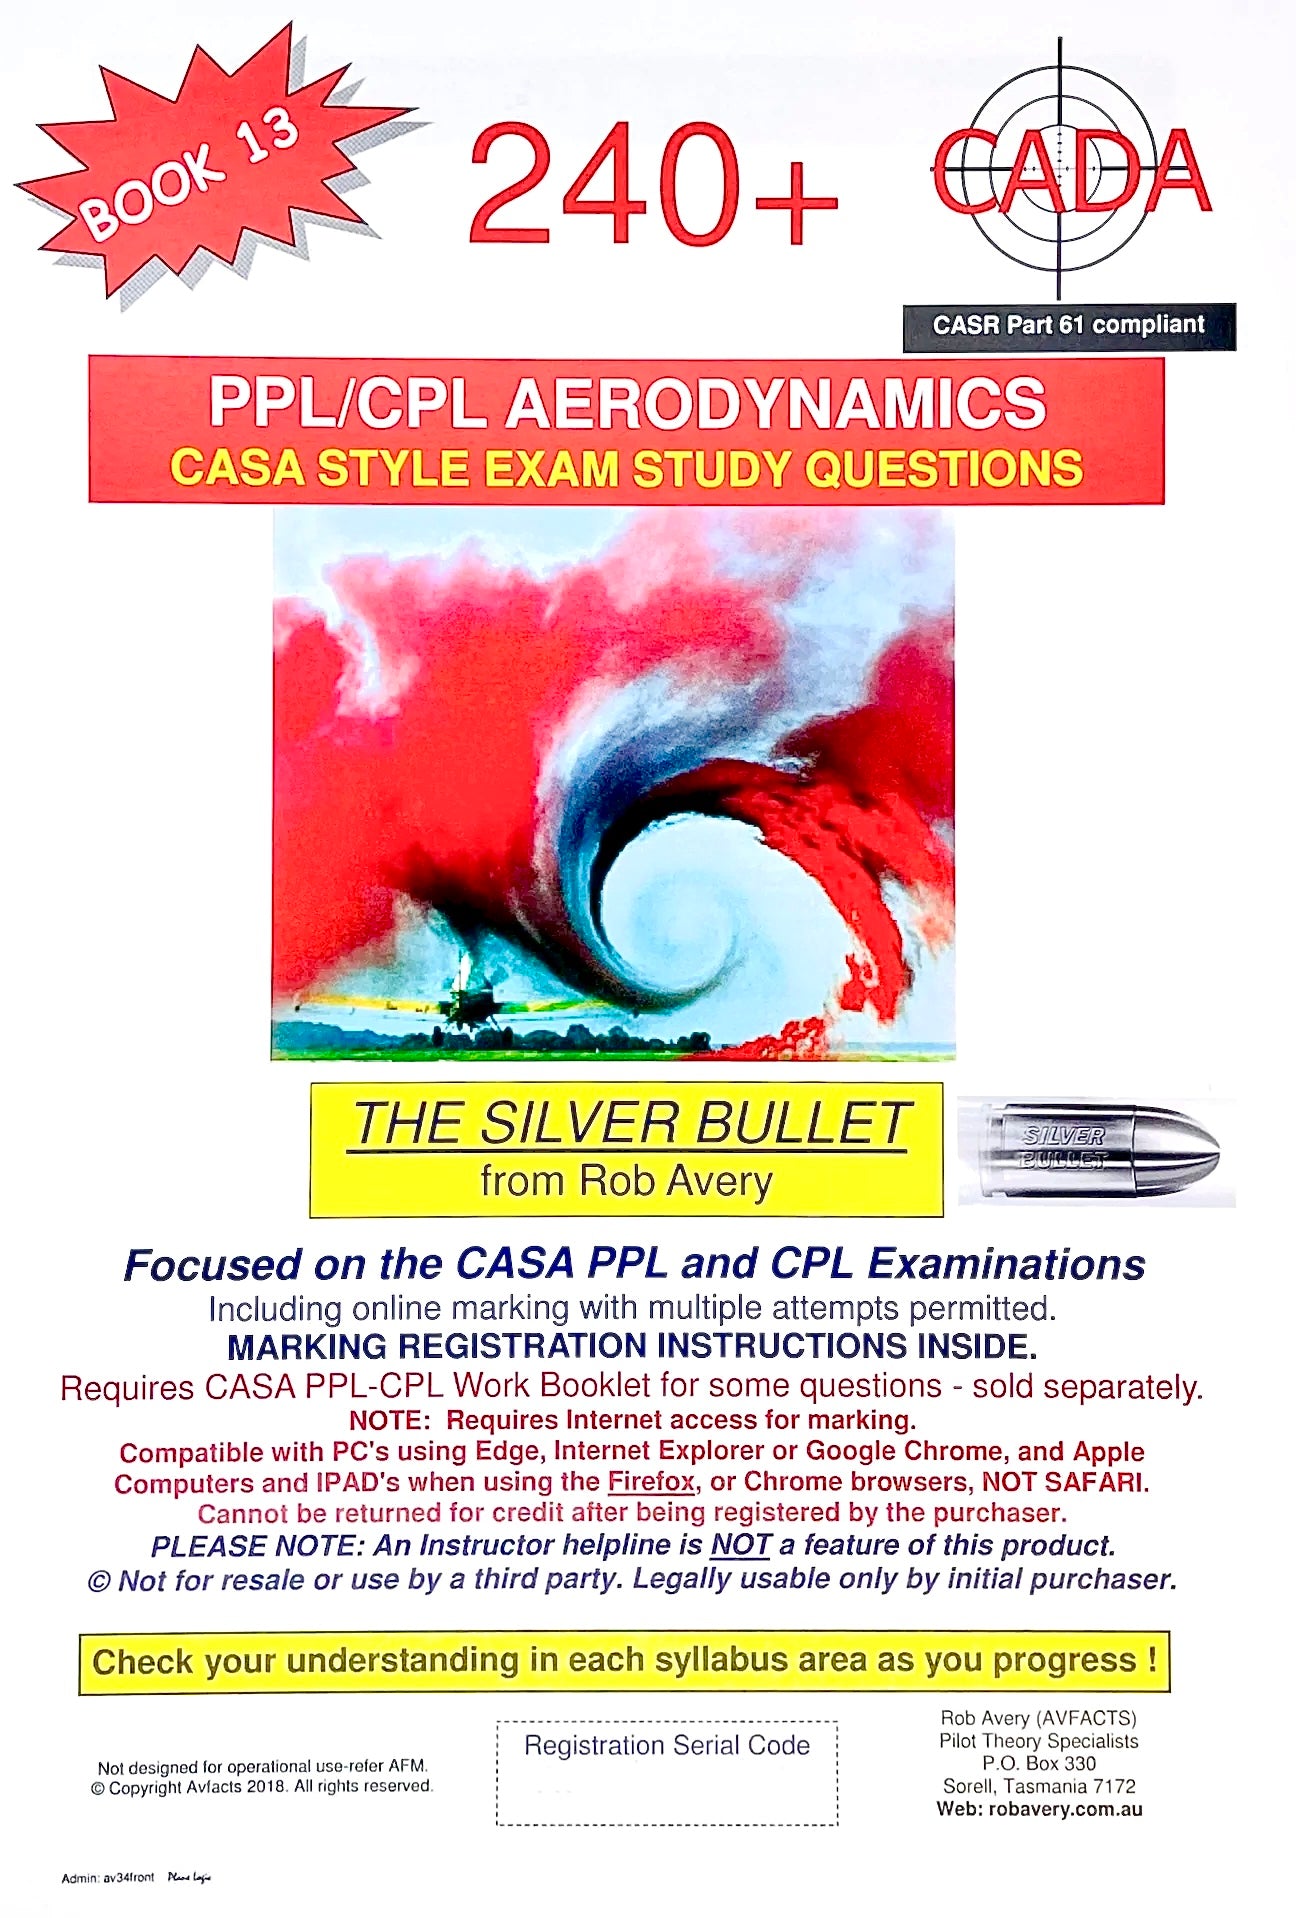 Avfacts by Rob Avery PPL/CPL Aerodynamics 240+ Questions - AV34